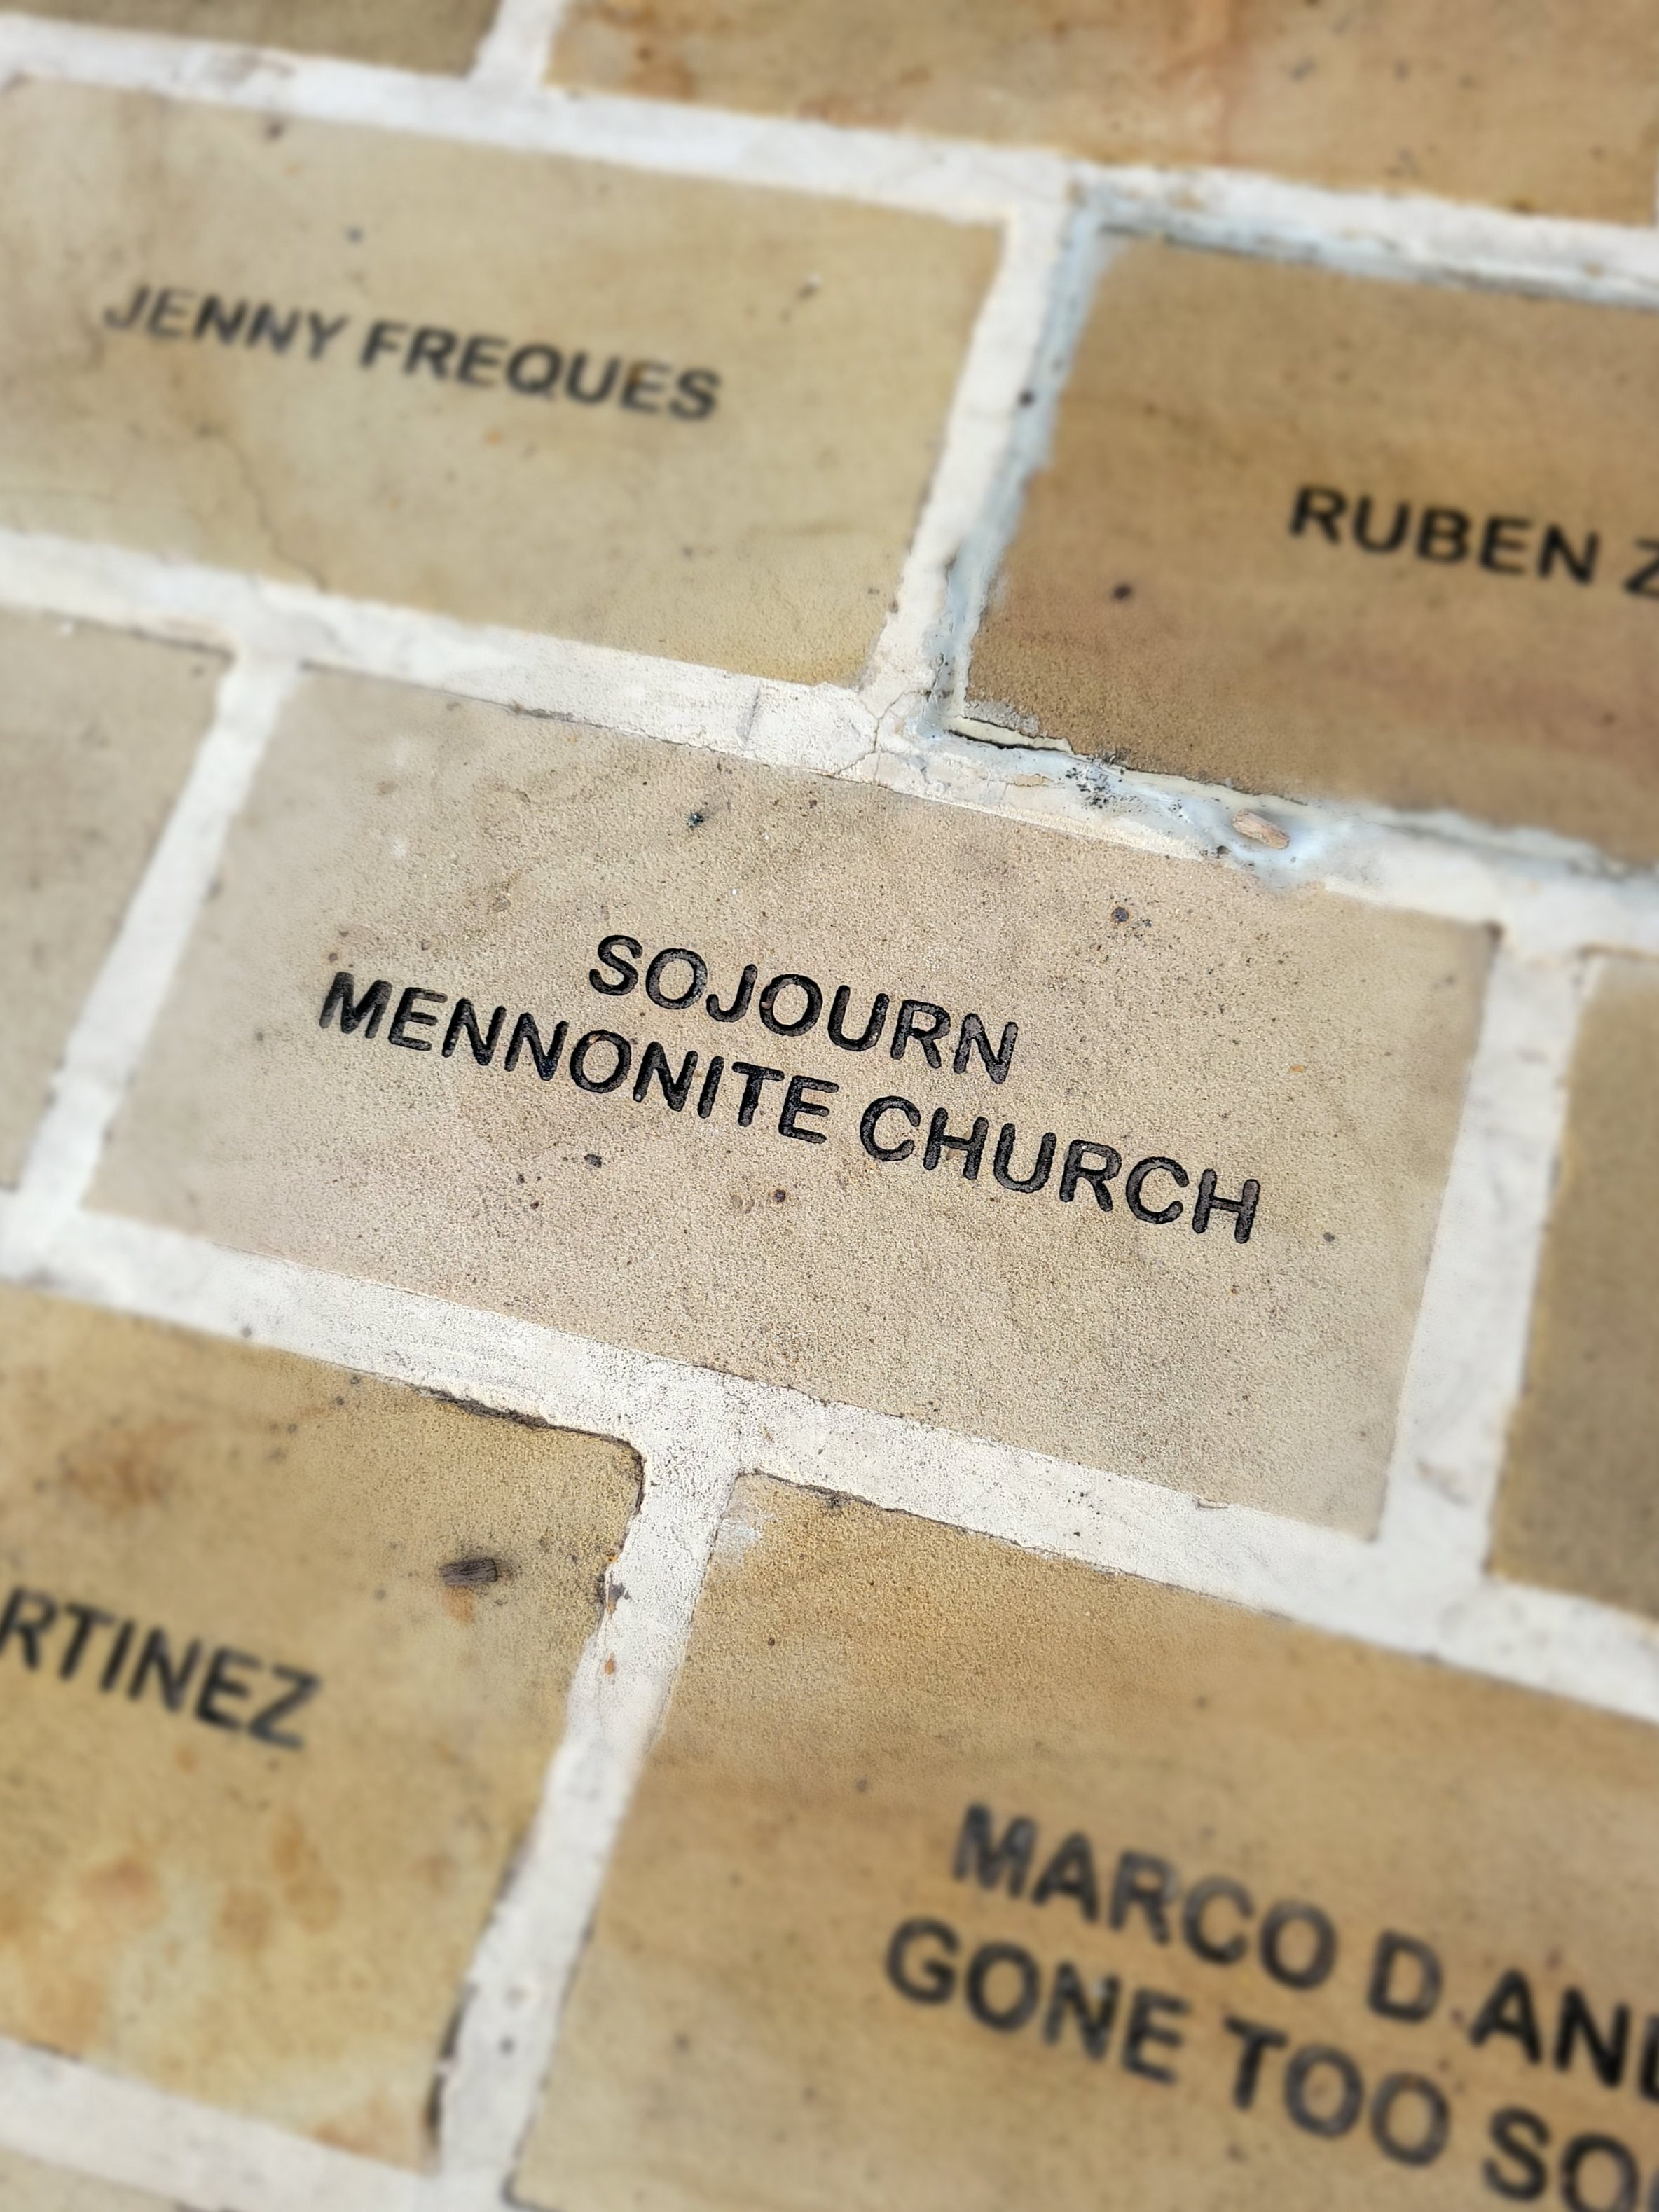 What do Mennonites believe?